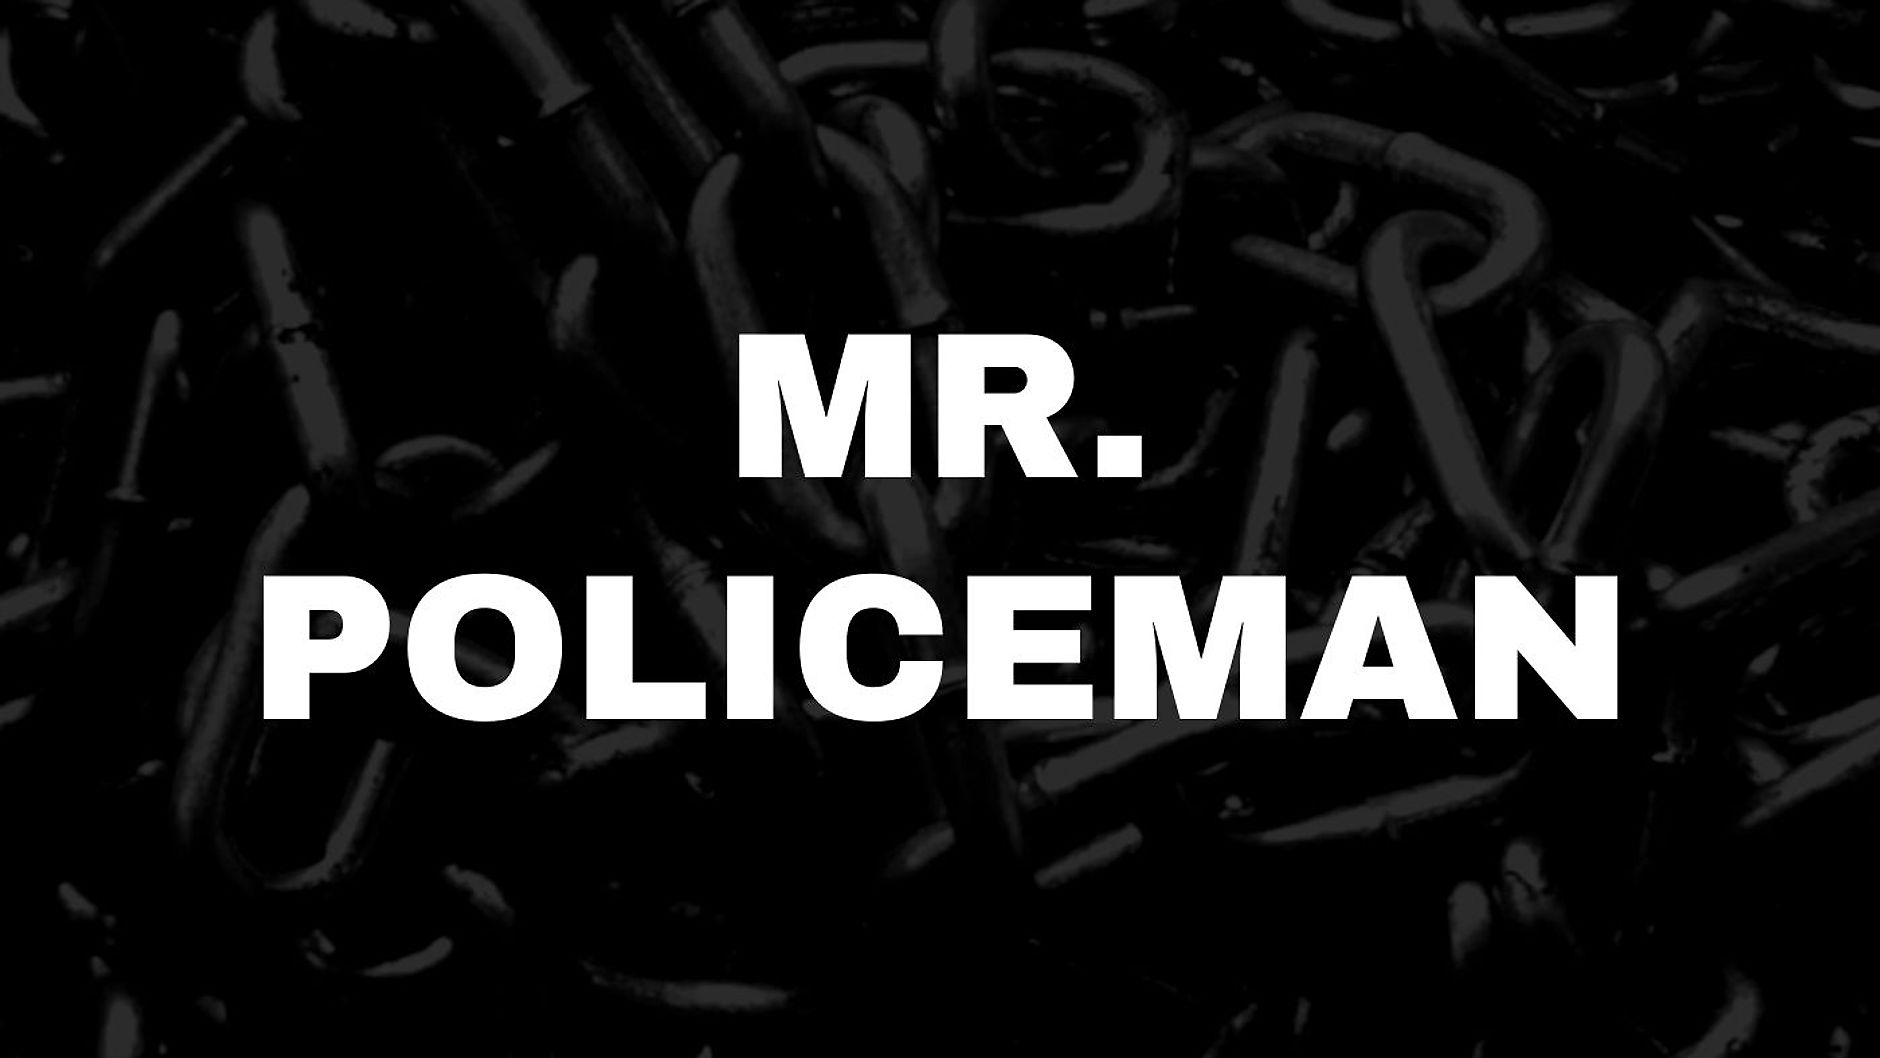 MR. POLICEMAN